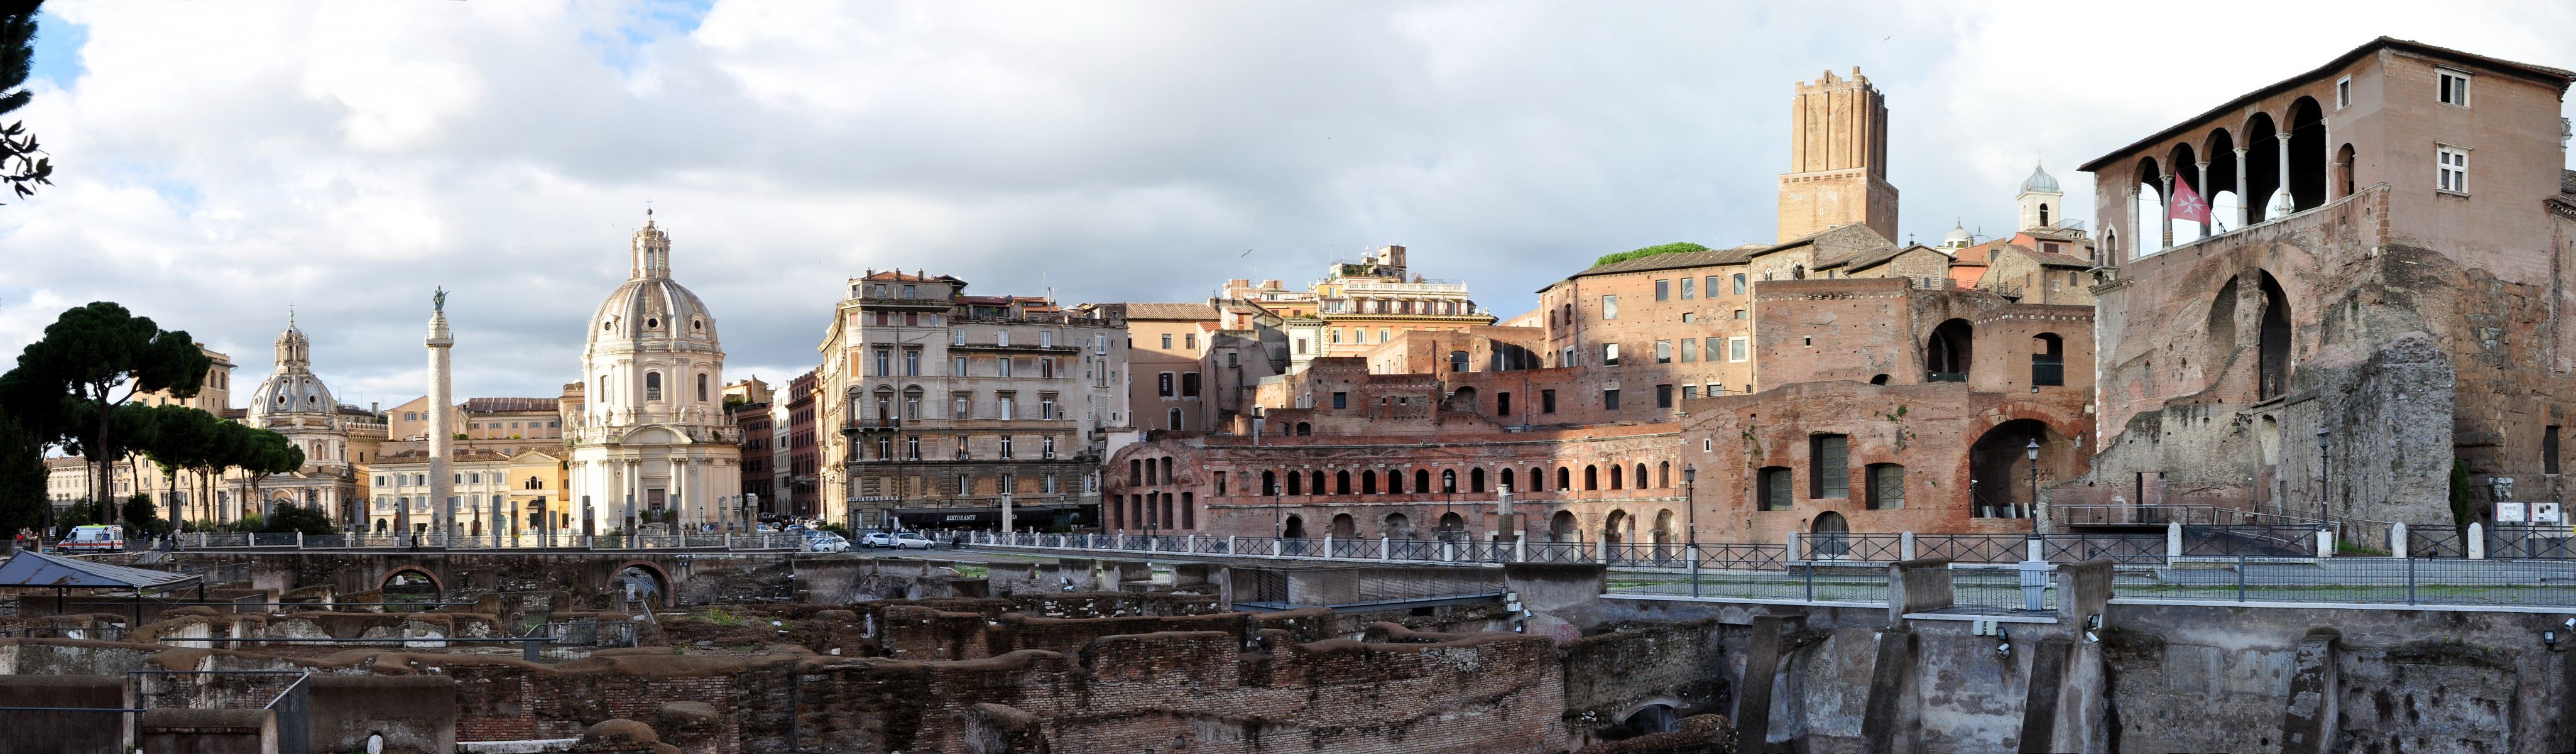 Trajan Forum - Rome - Italy.jpg